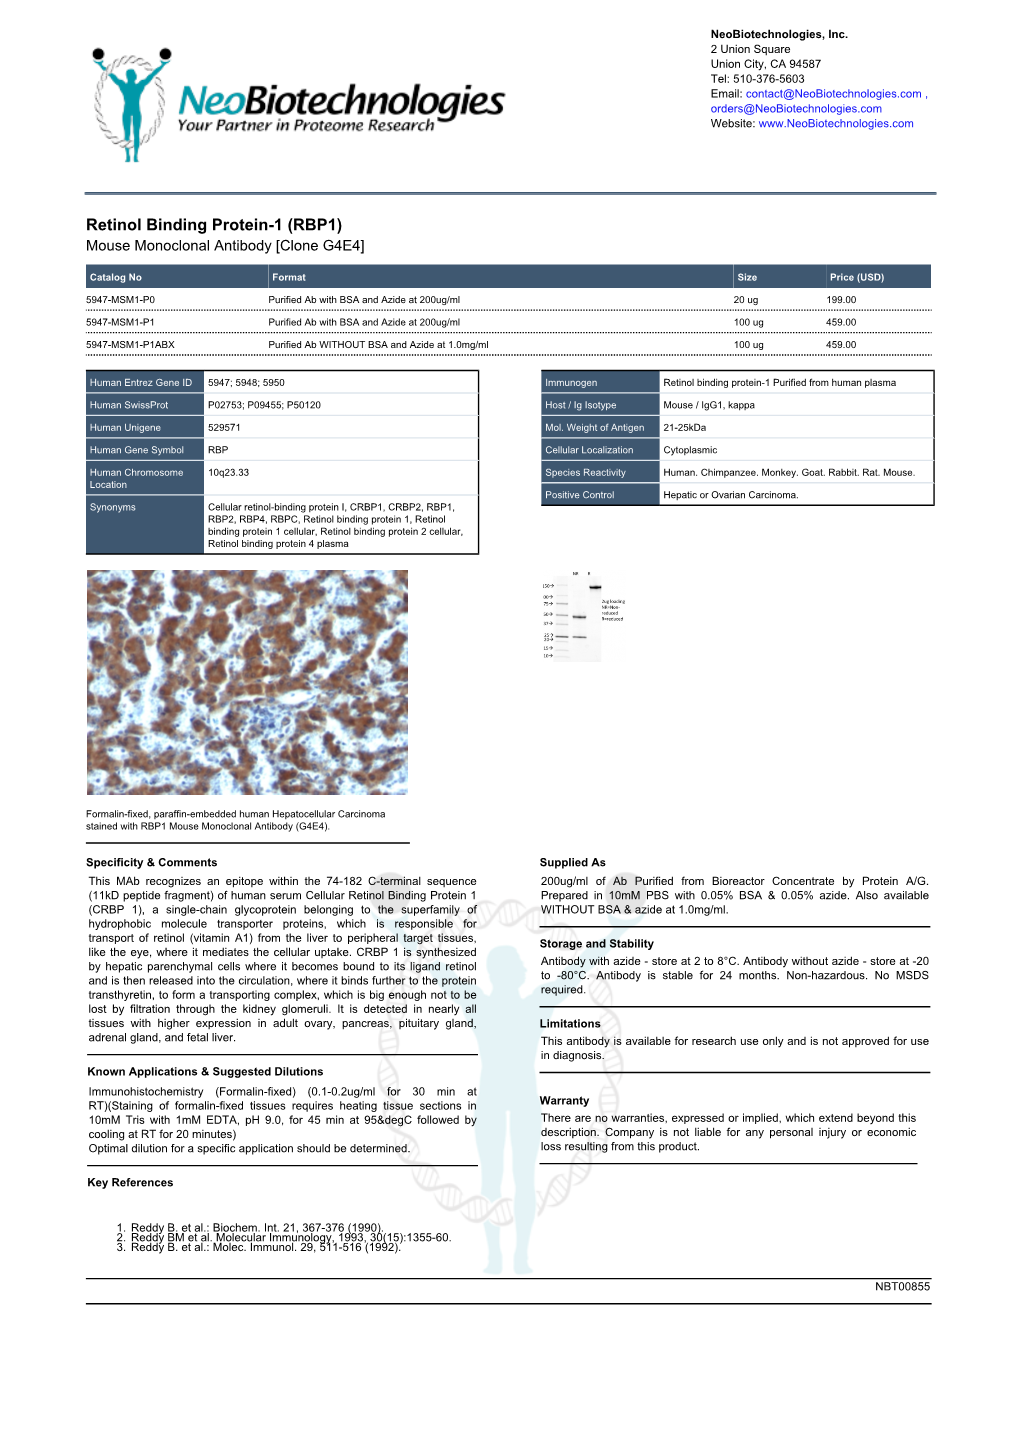 Retinol Binding Protein-1 (RBP1) Mouse Monoclonal Antibody [Clone G4E4]